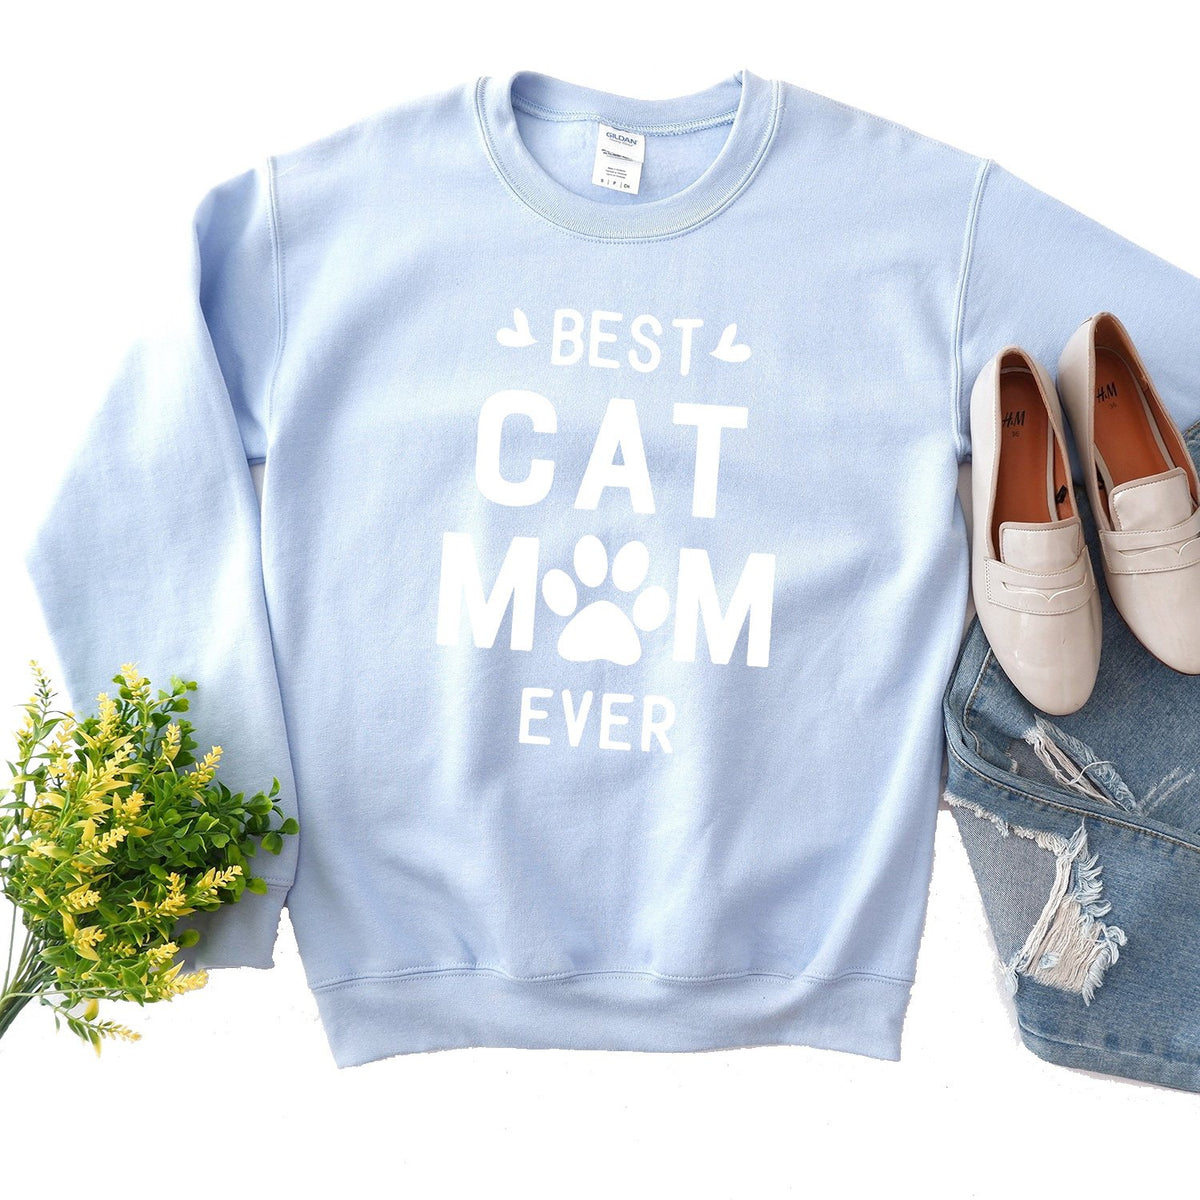 Best Cat Mom Ever - Long Sleeve Heavy Crewneck Sweatshirt